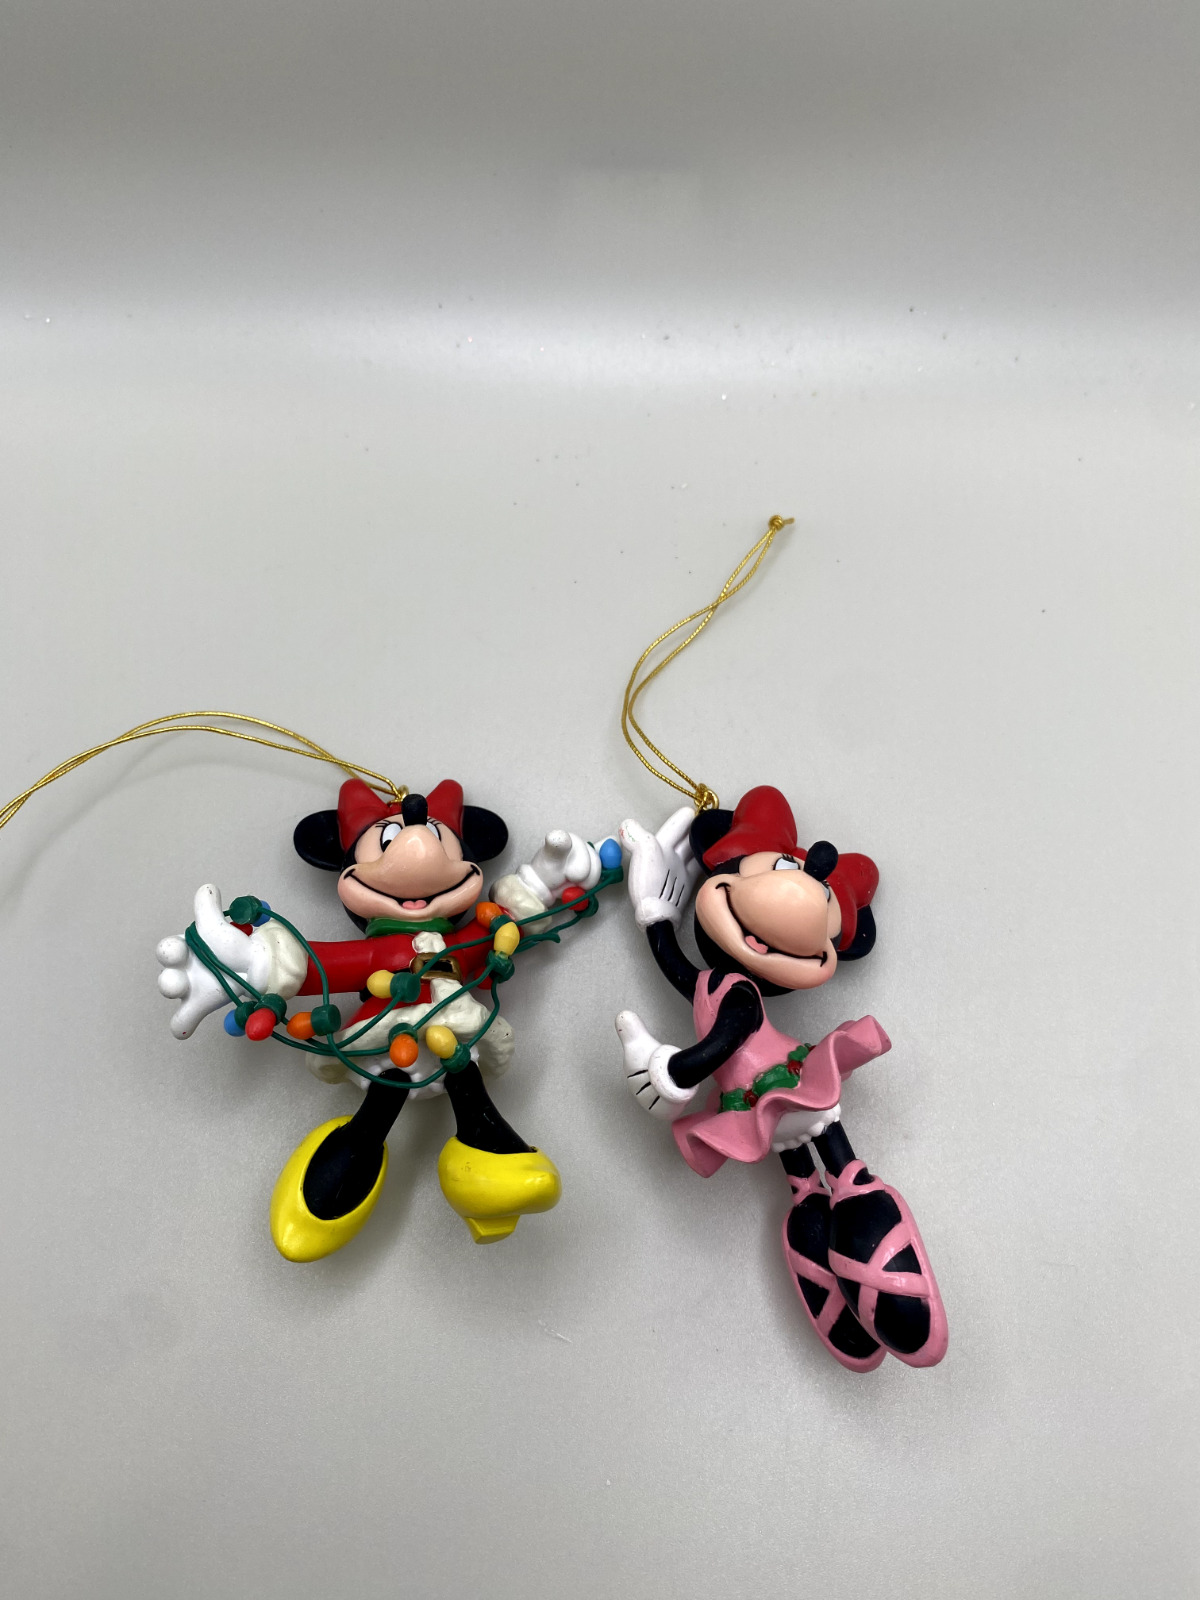 Lot of 2 Enesco Disney Minnie Mouse Ornaments Ballerina, Light Strand